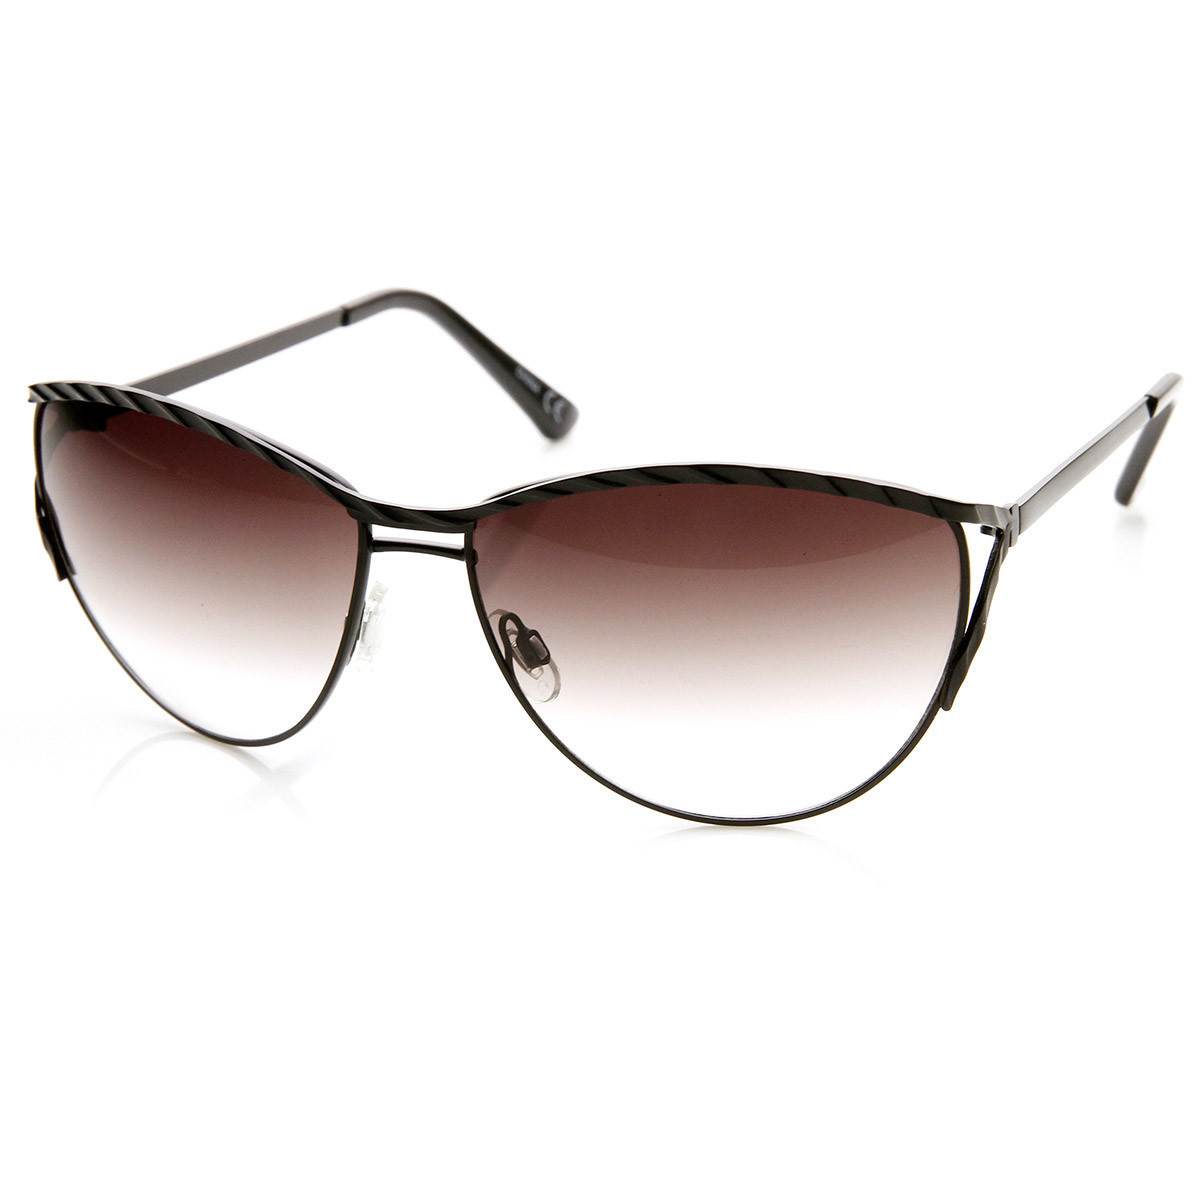 Womens Oversize Embellished Metal Cat Eye Sunglasses - 9327 - Brown